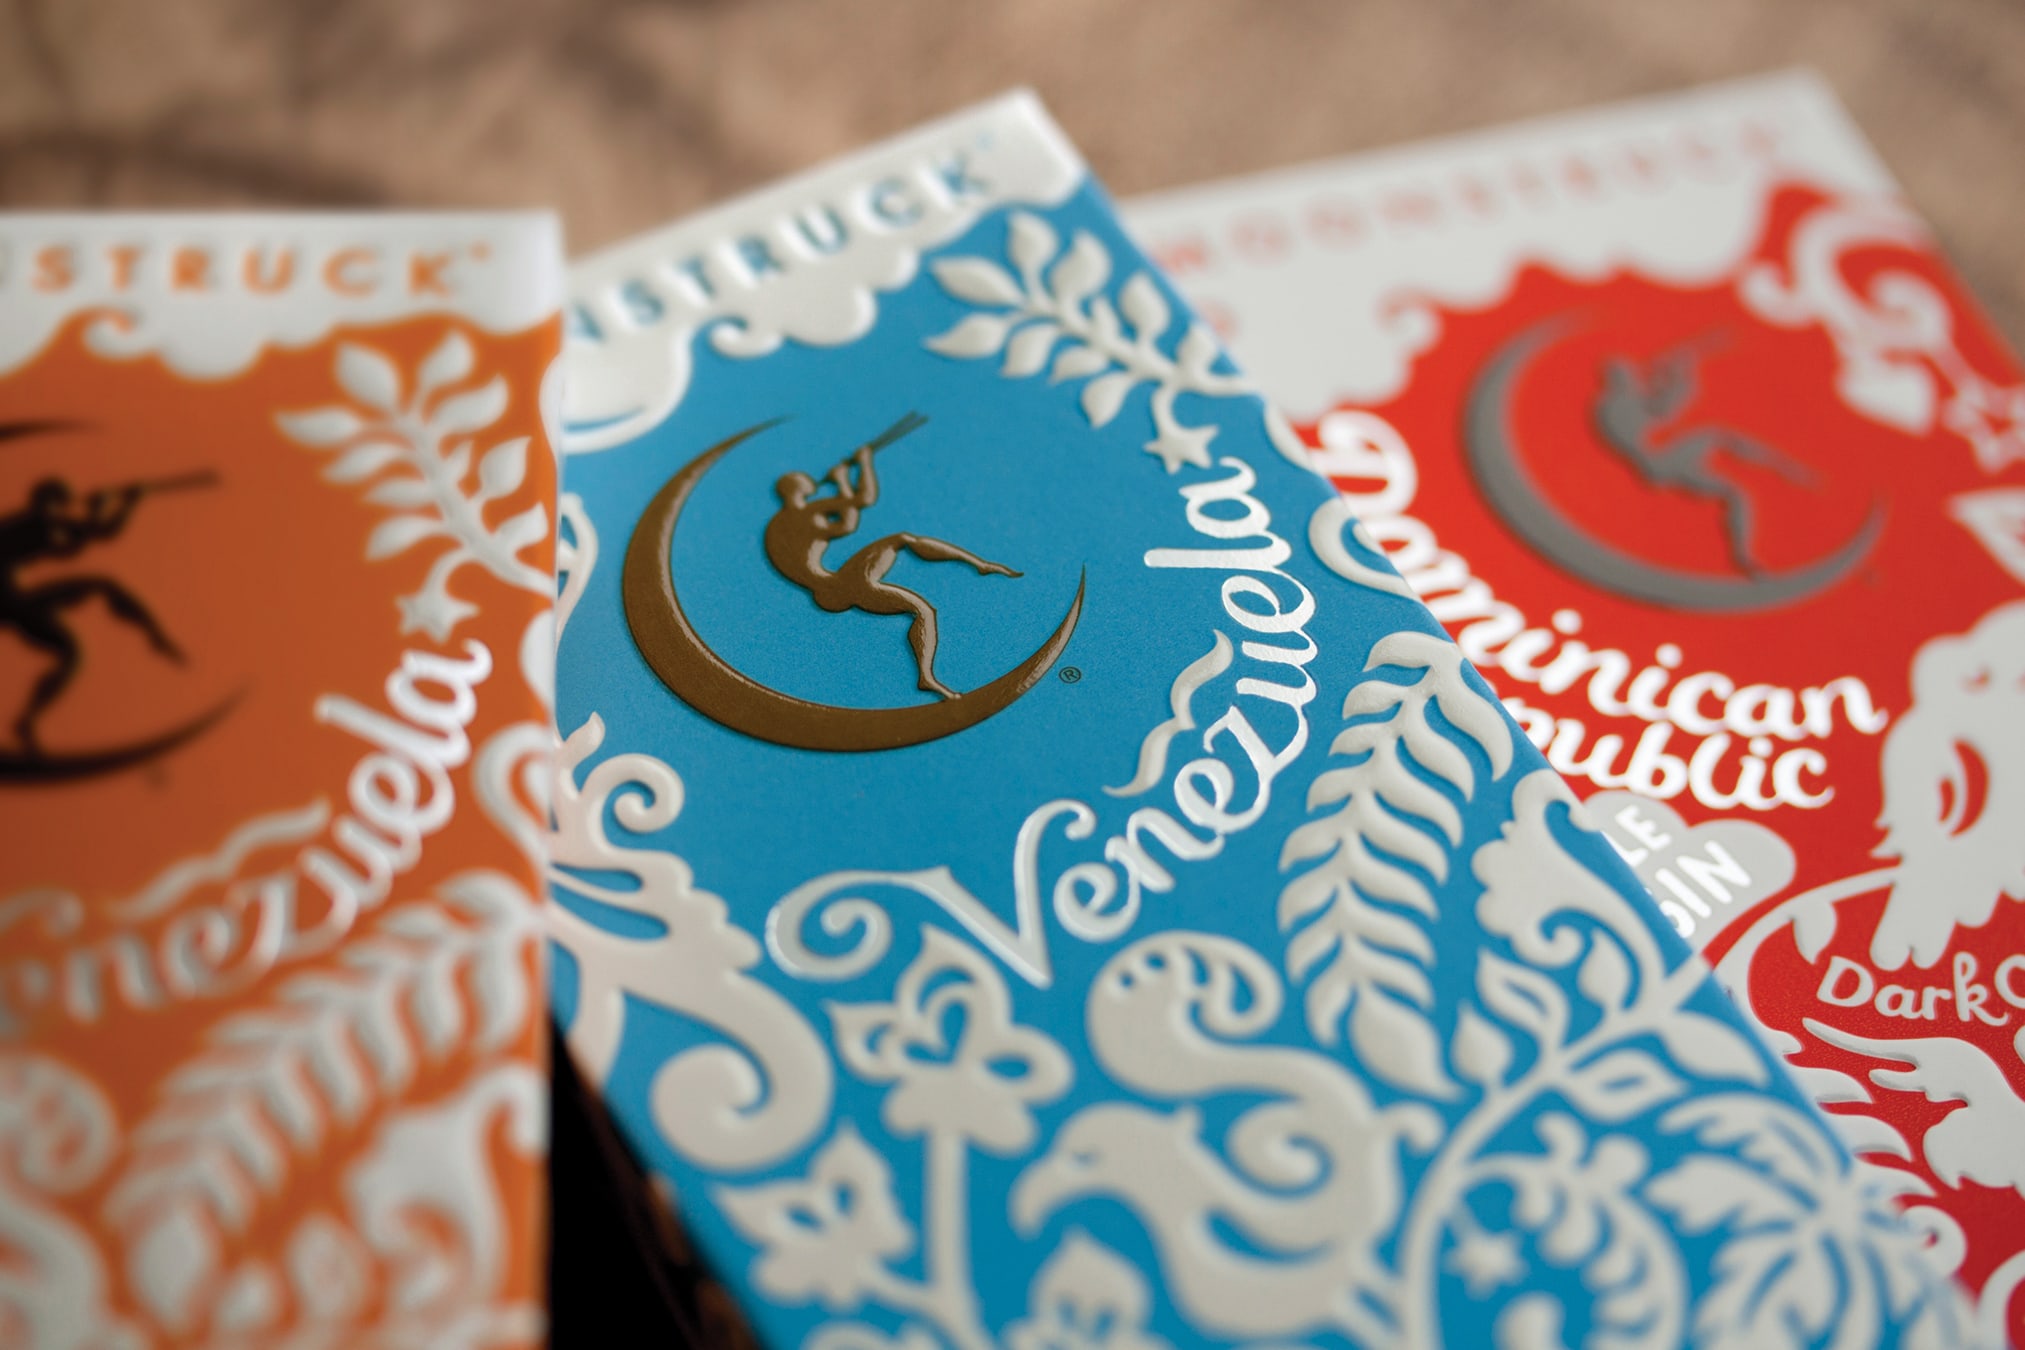 Moonstruck Chocolate single origin bar packaging design